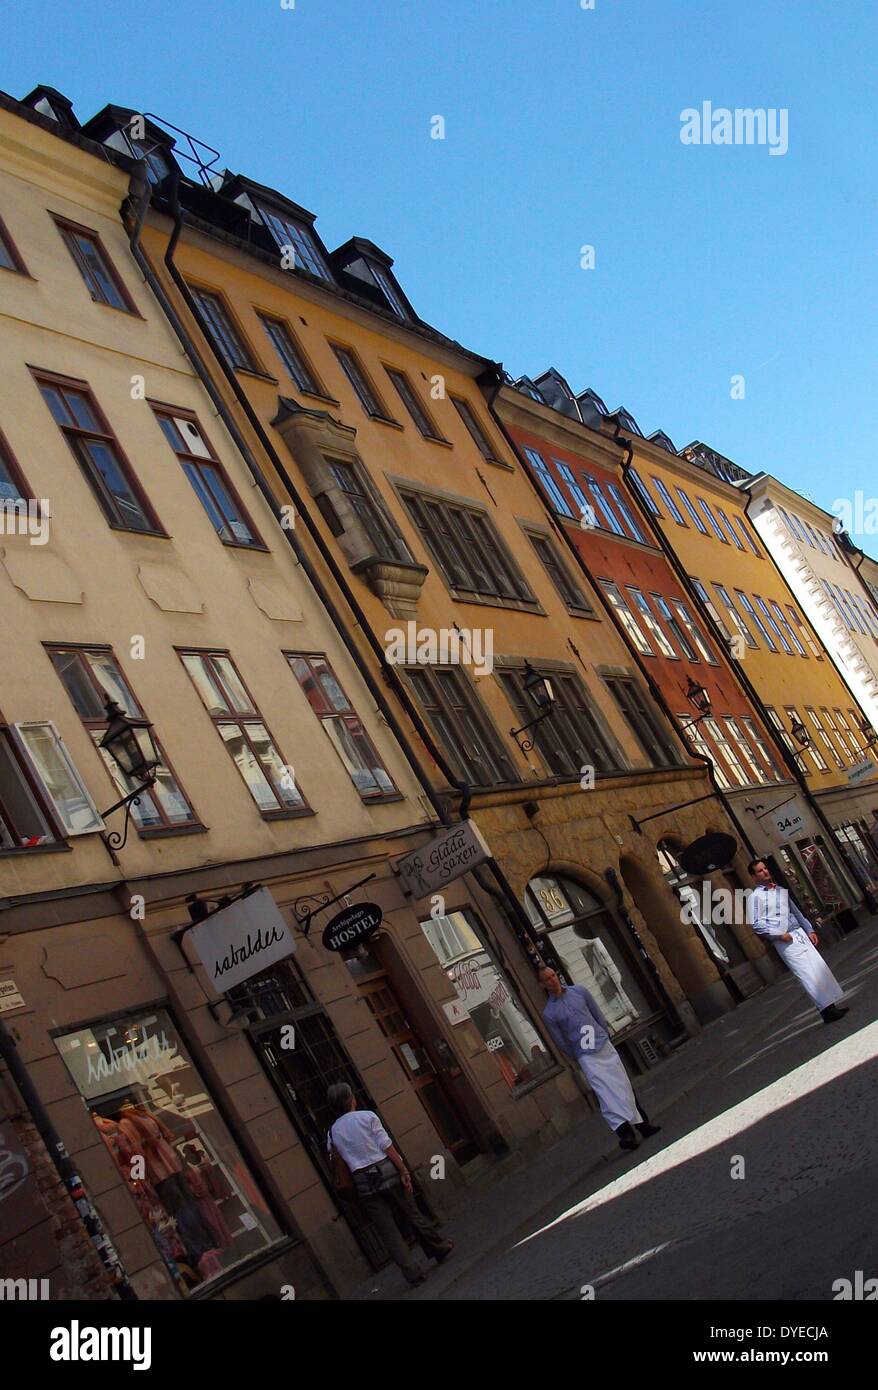 Street scene in the old city center, Stockholm, Sweden. 2012 Stock Photo